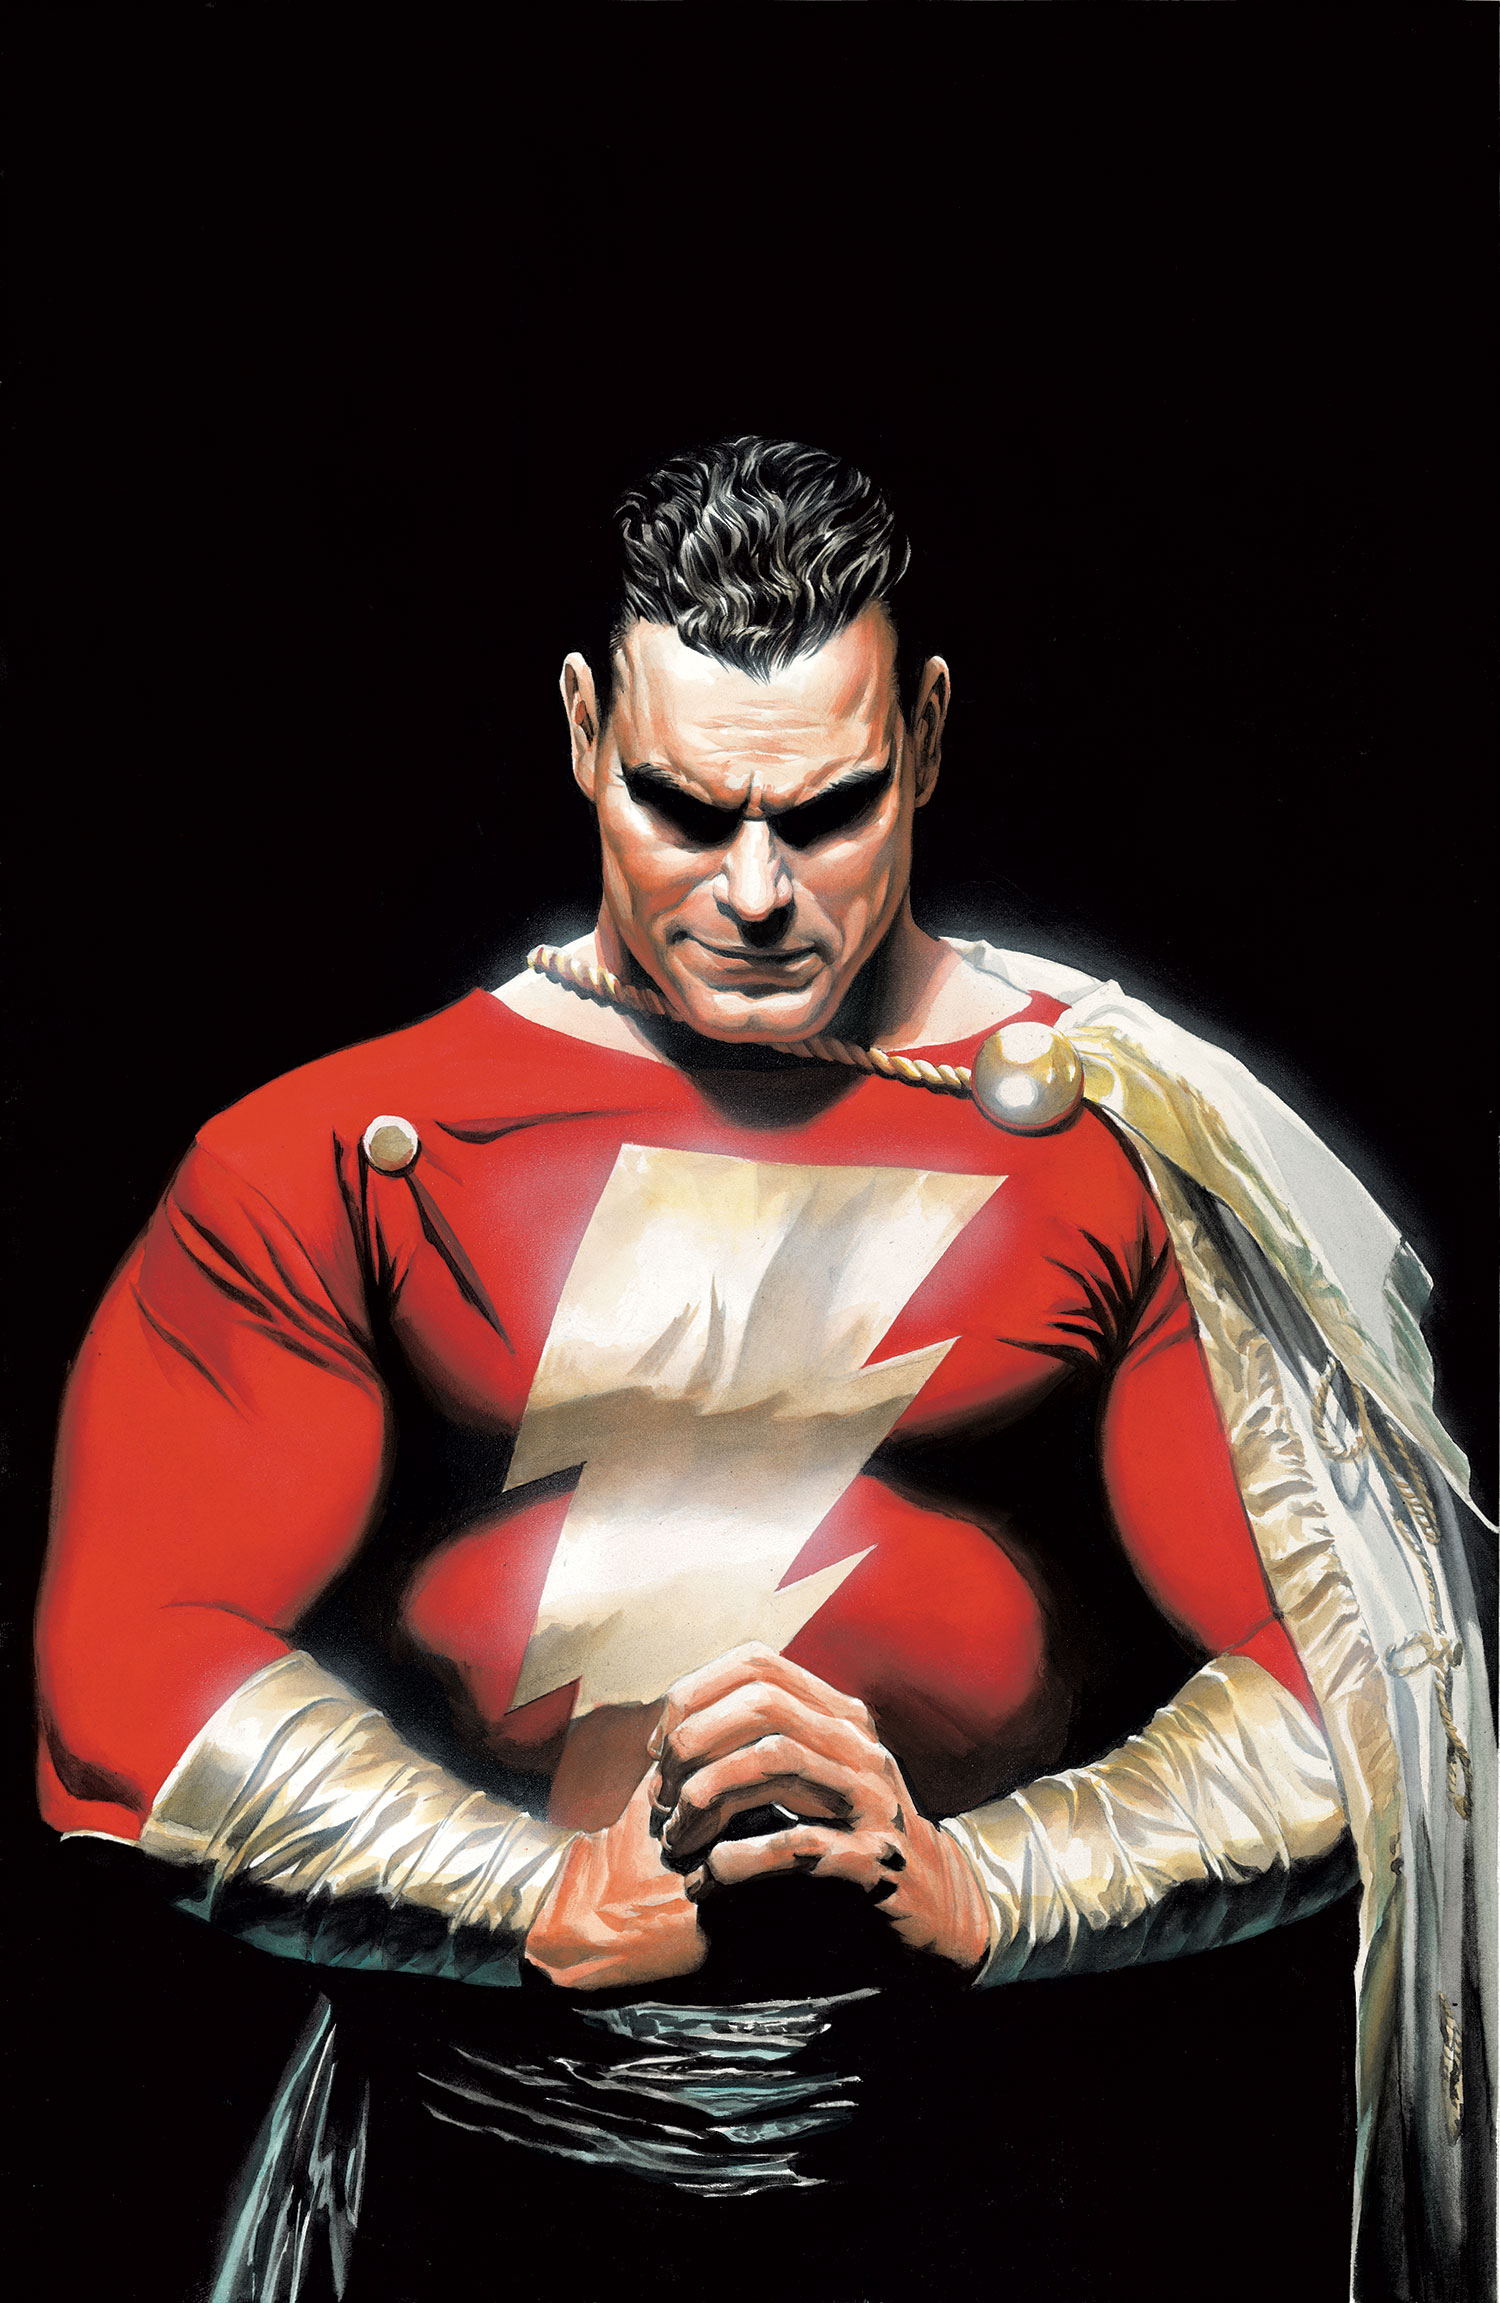 Figurine super-héros asst. dc heroes superman flash shazam